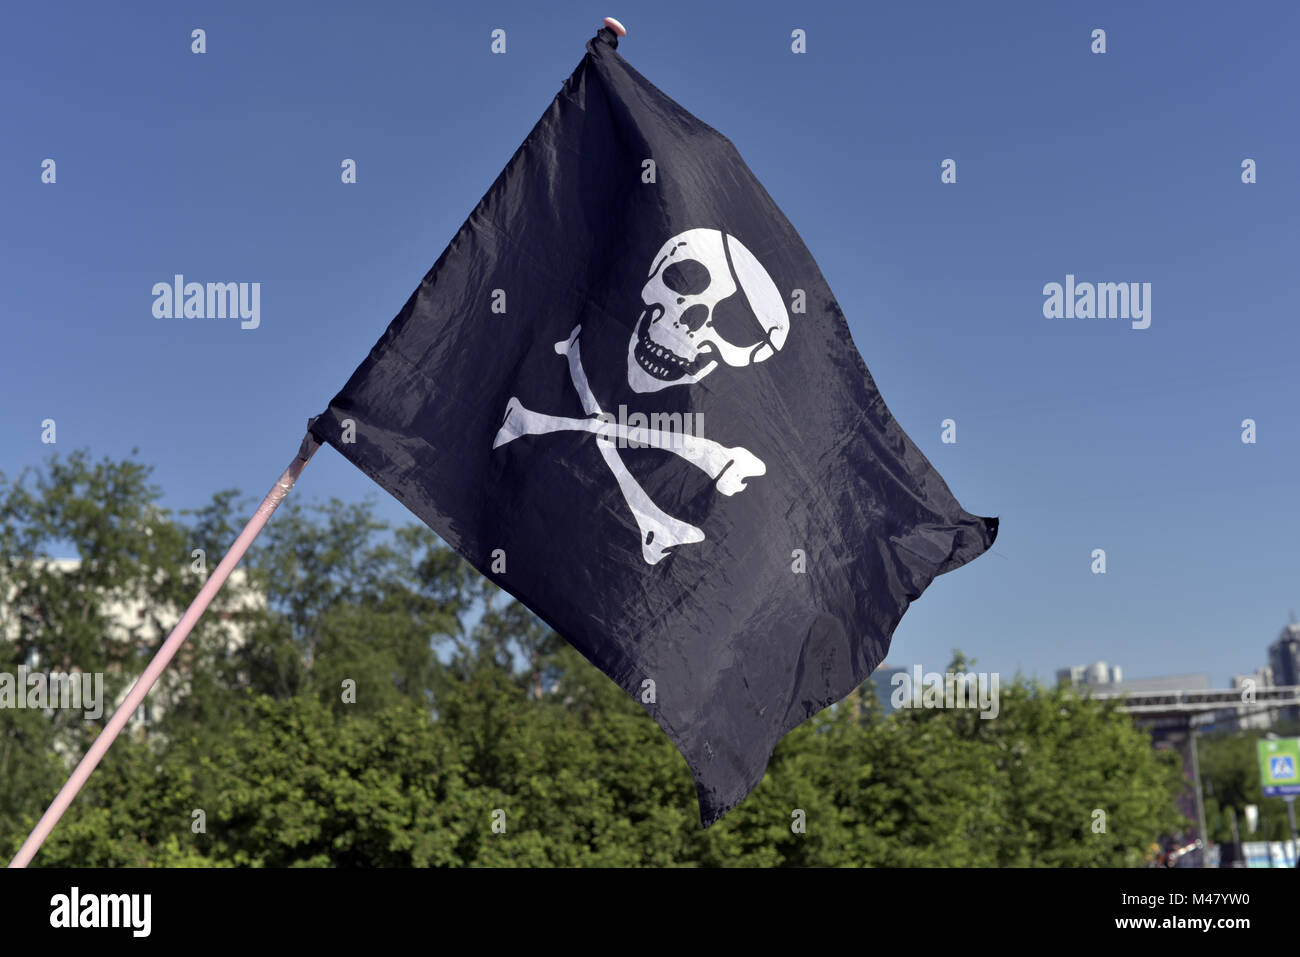 Bandera pirata en el festival de la cultura de la juventud Foto de stock